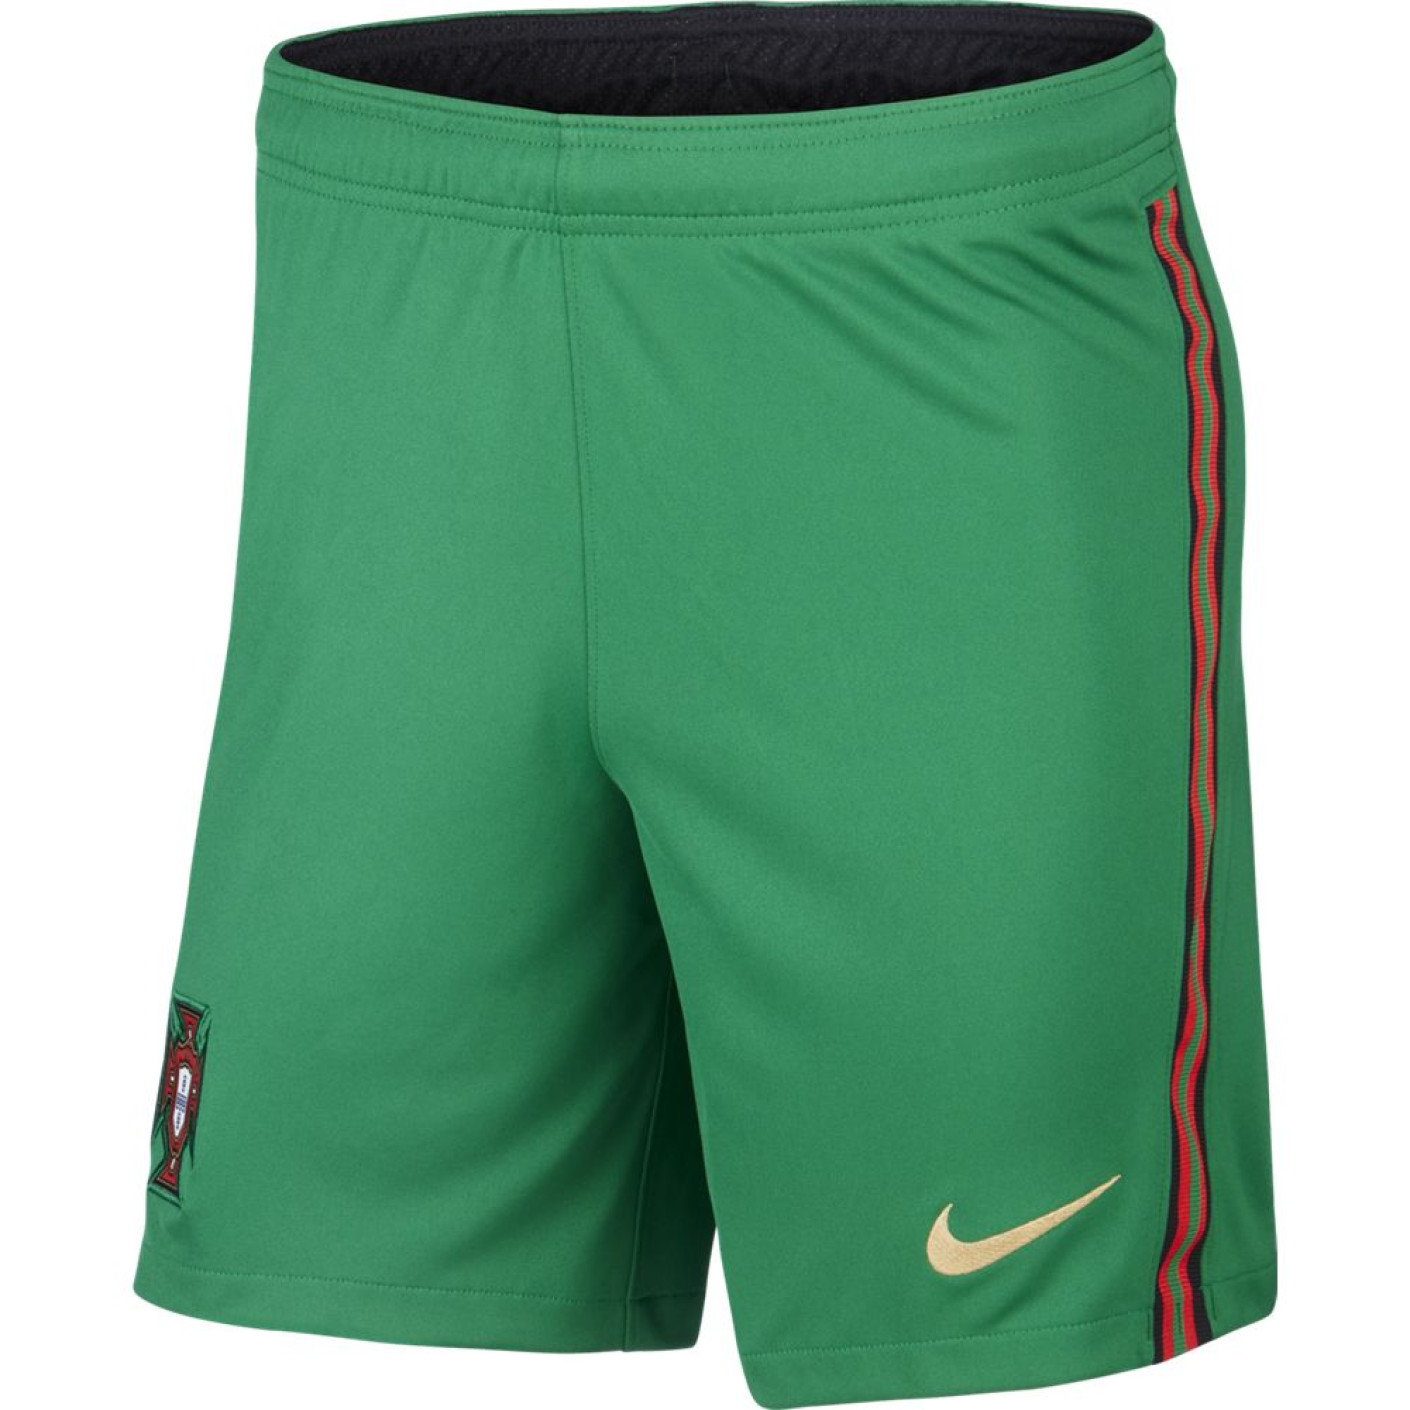 Nike Portugal Voetbalbroekje 2020 Groen